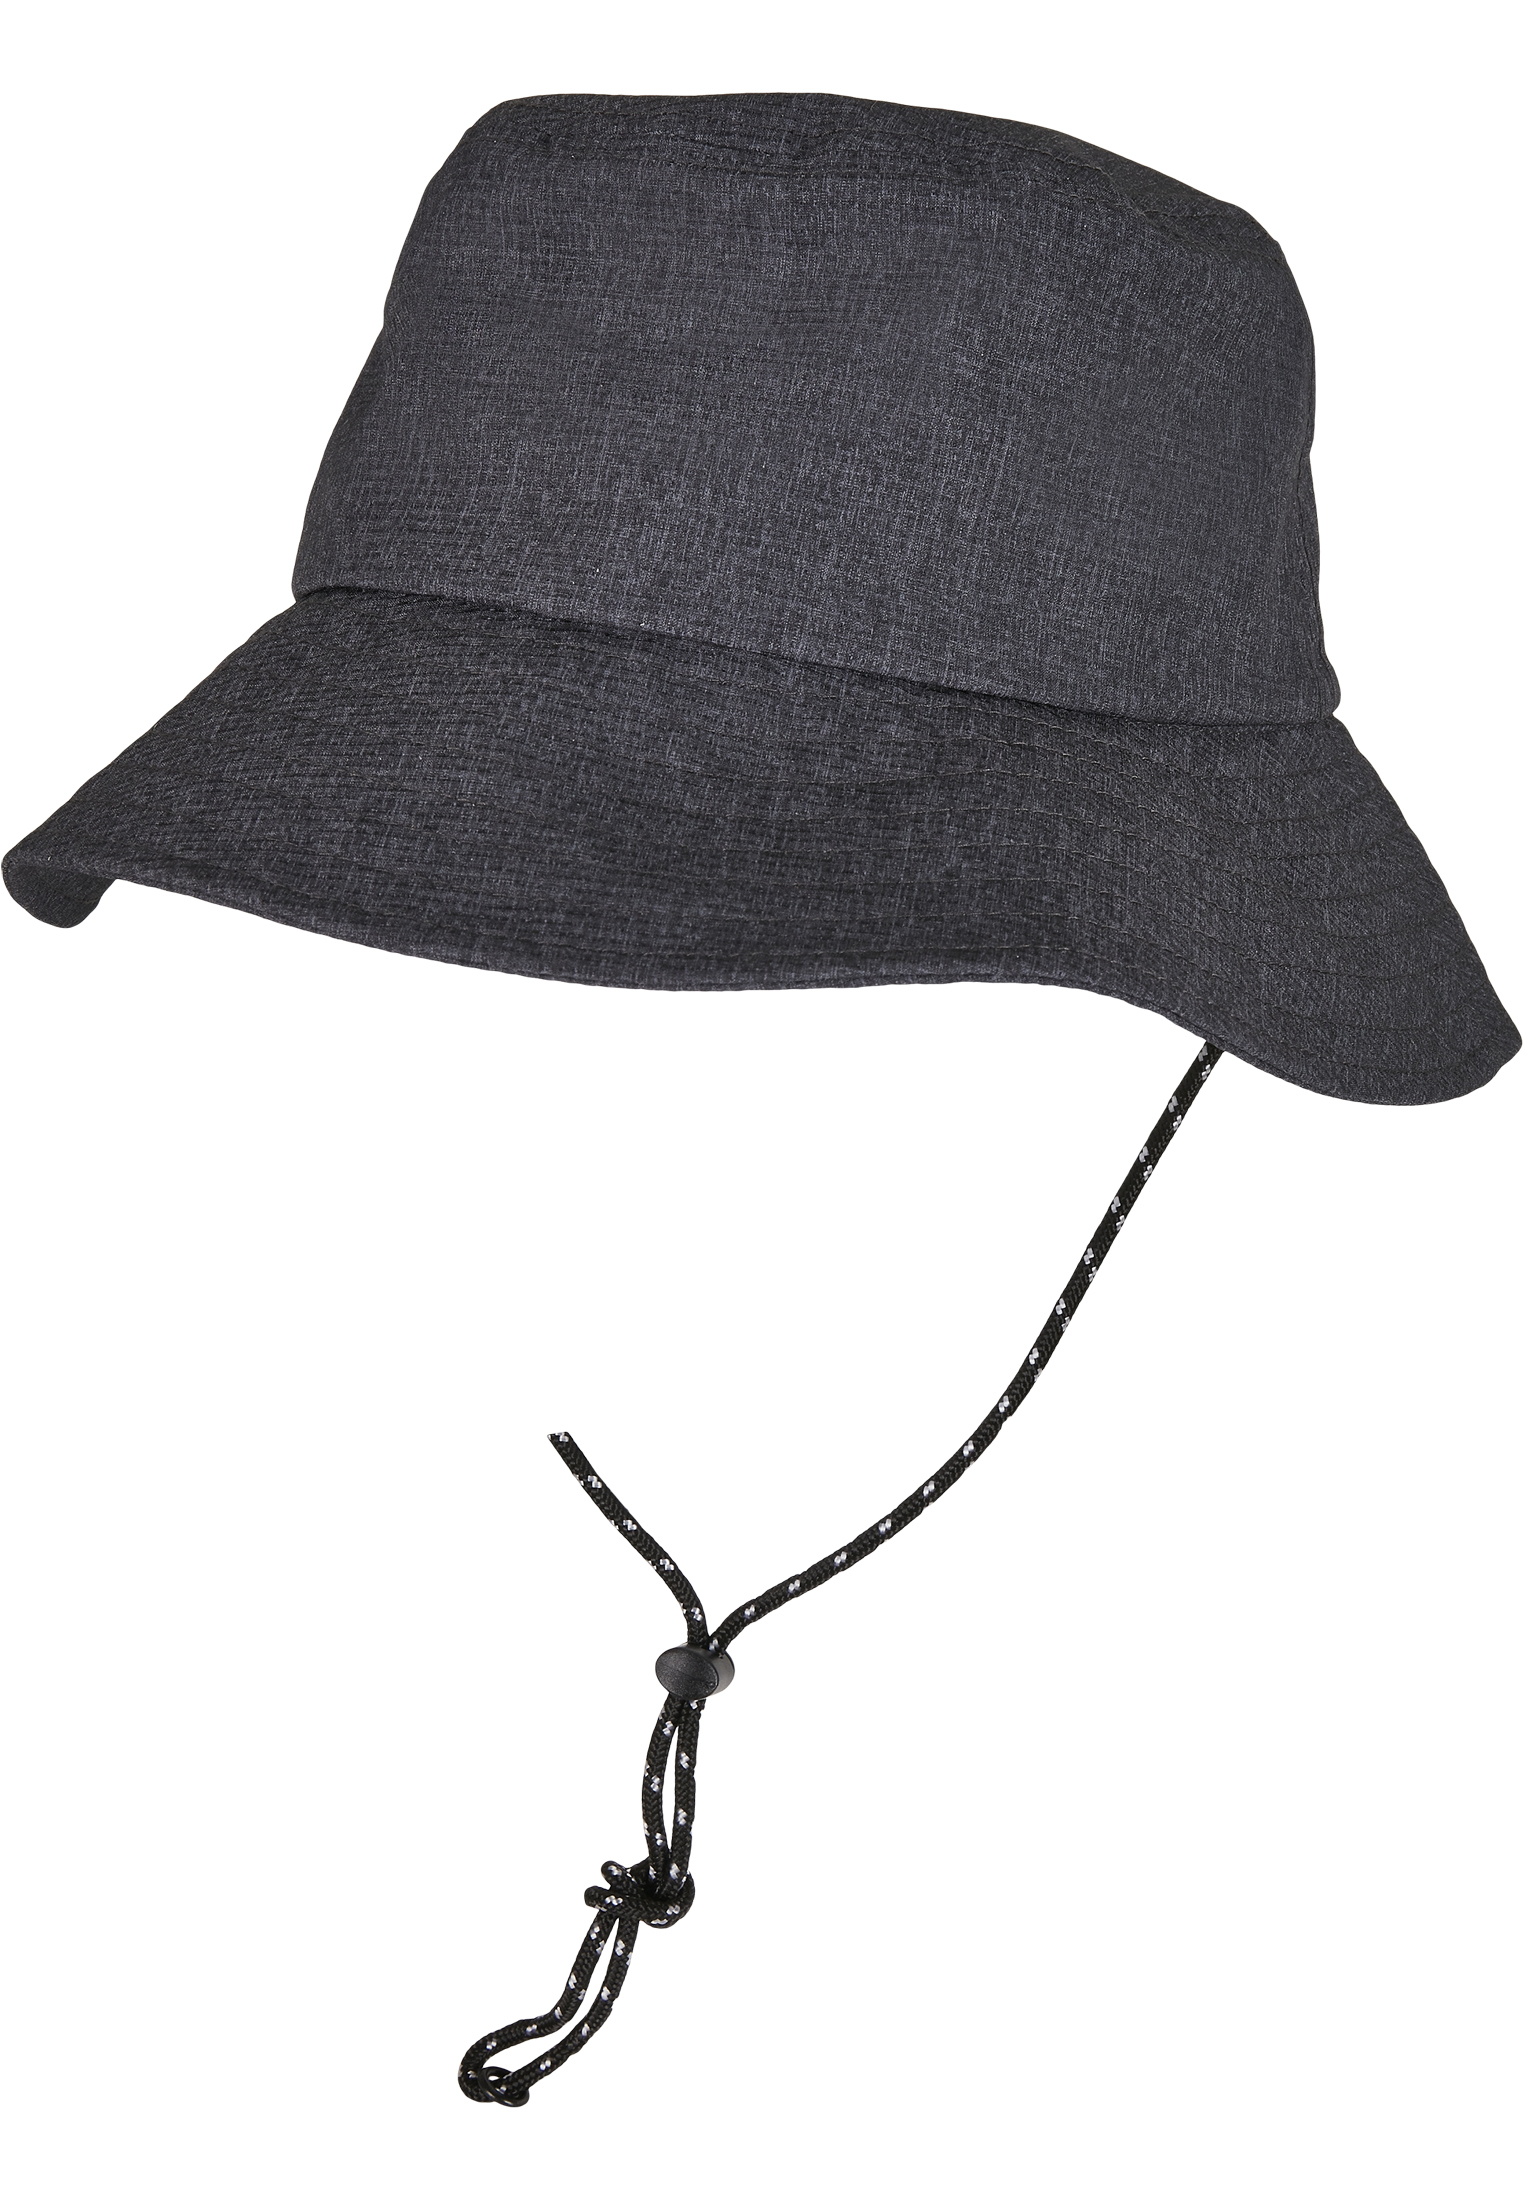 Adjustable Flexfit Hat-5003AB Bucket